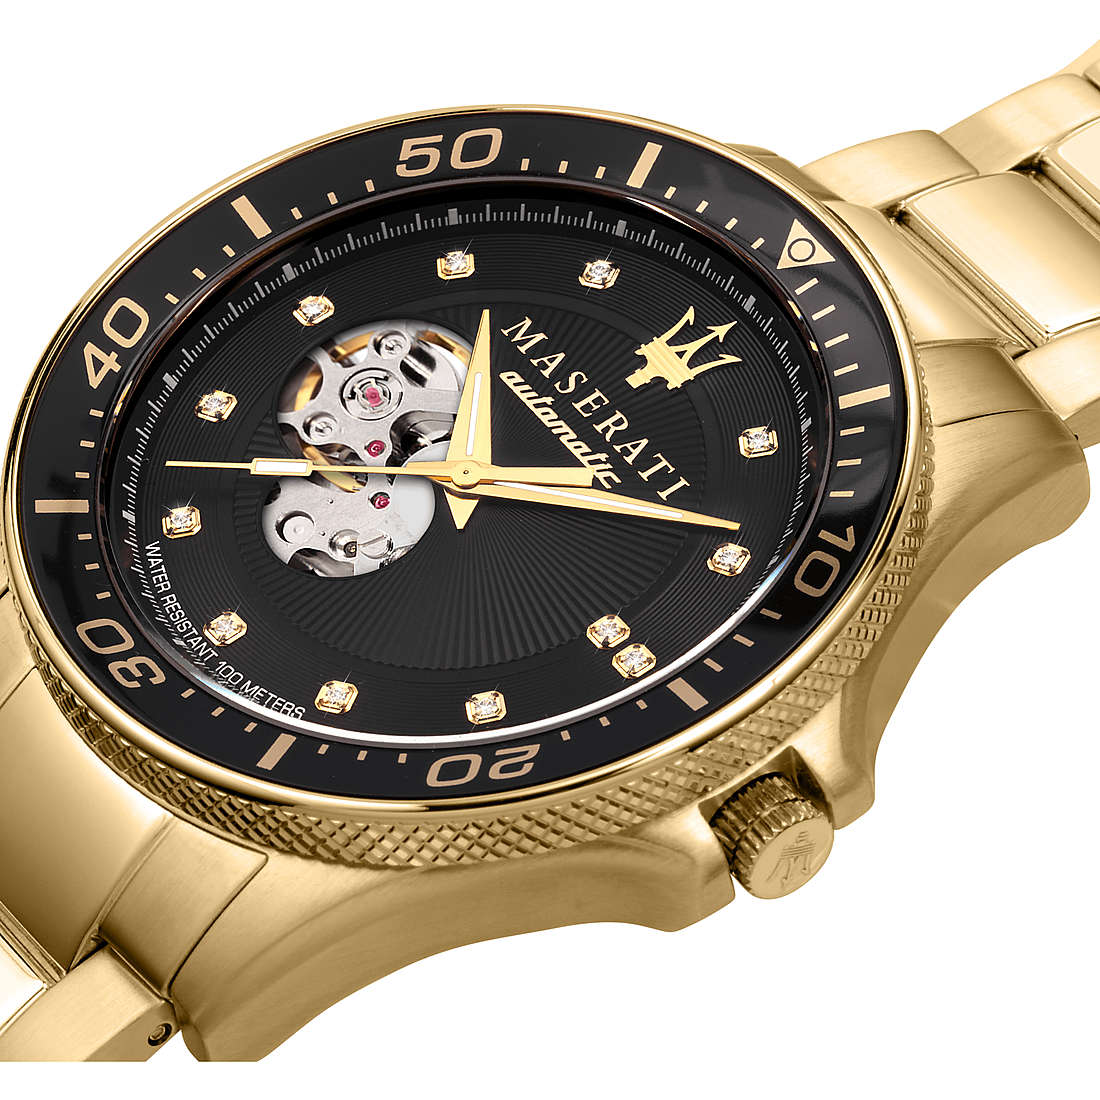 Maserati SFIDA Black Dial Yellow Gold Toned Watch For Men - R8823140003